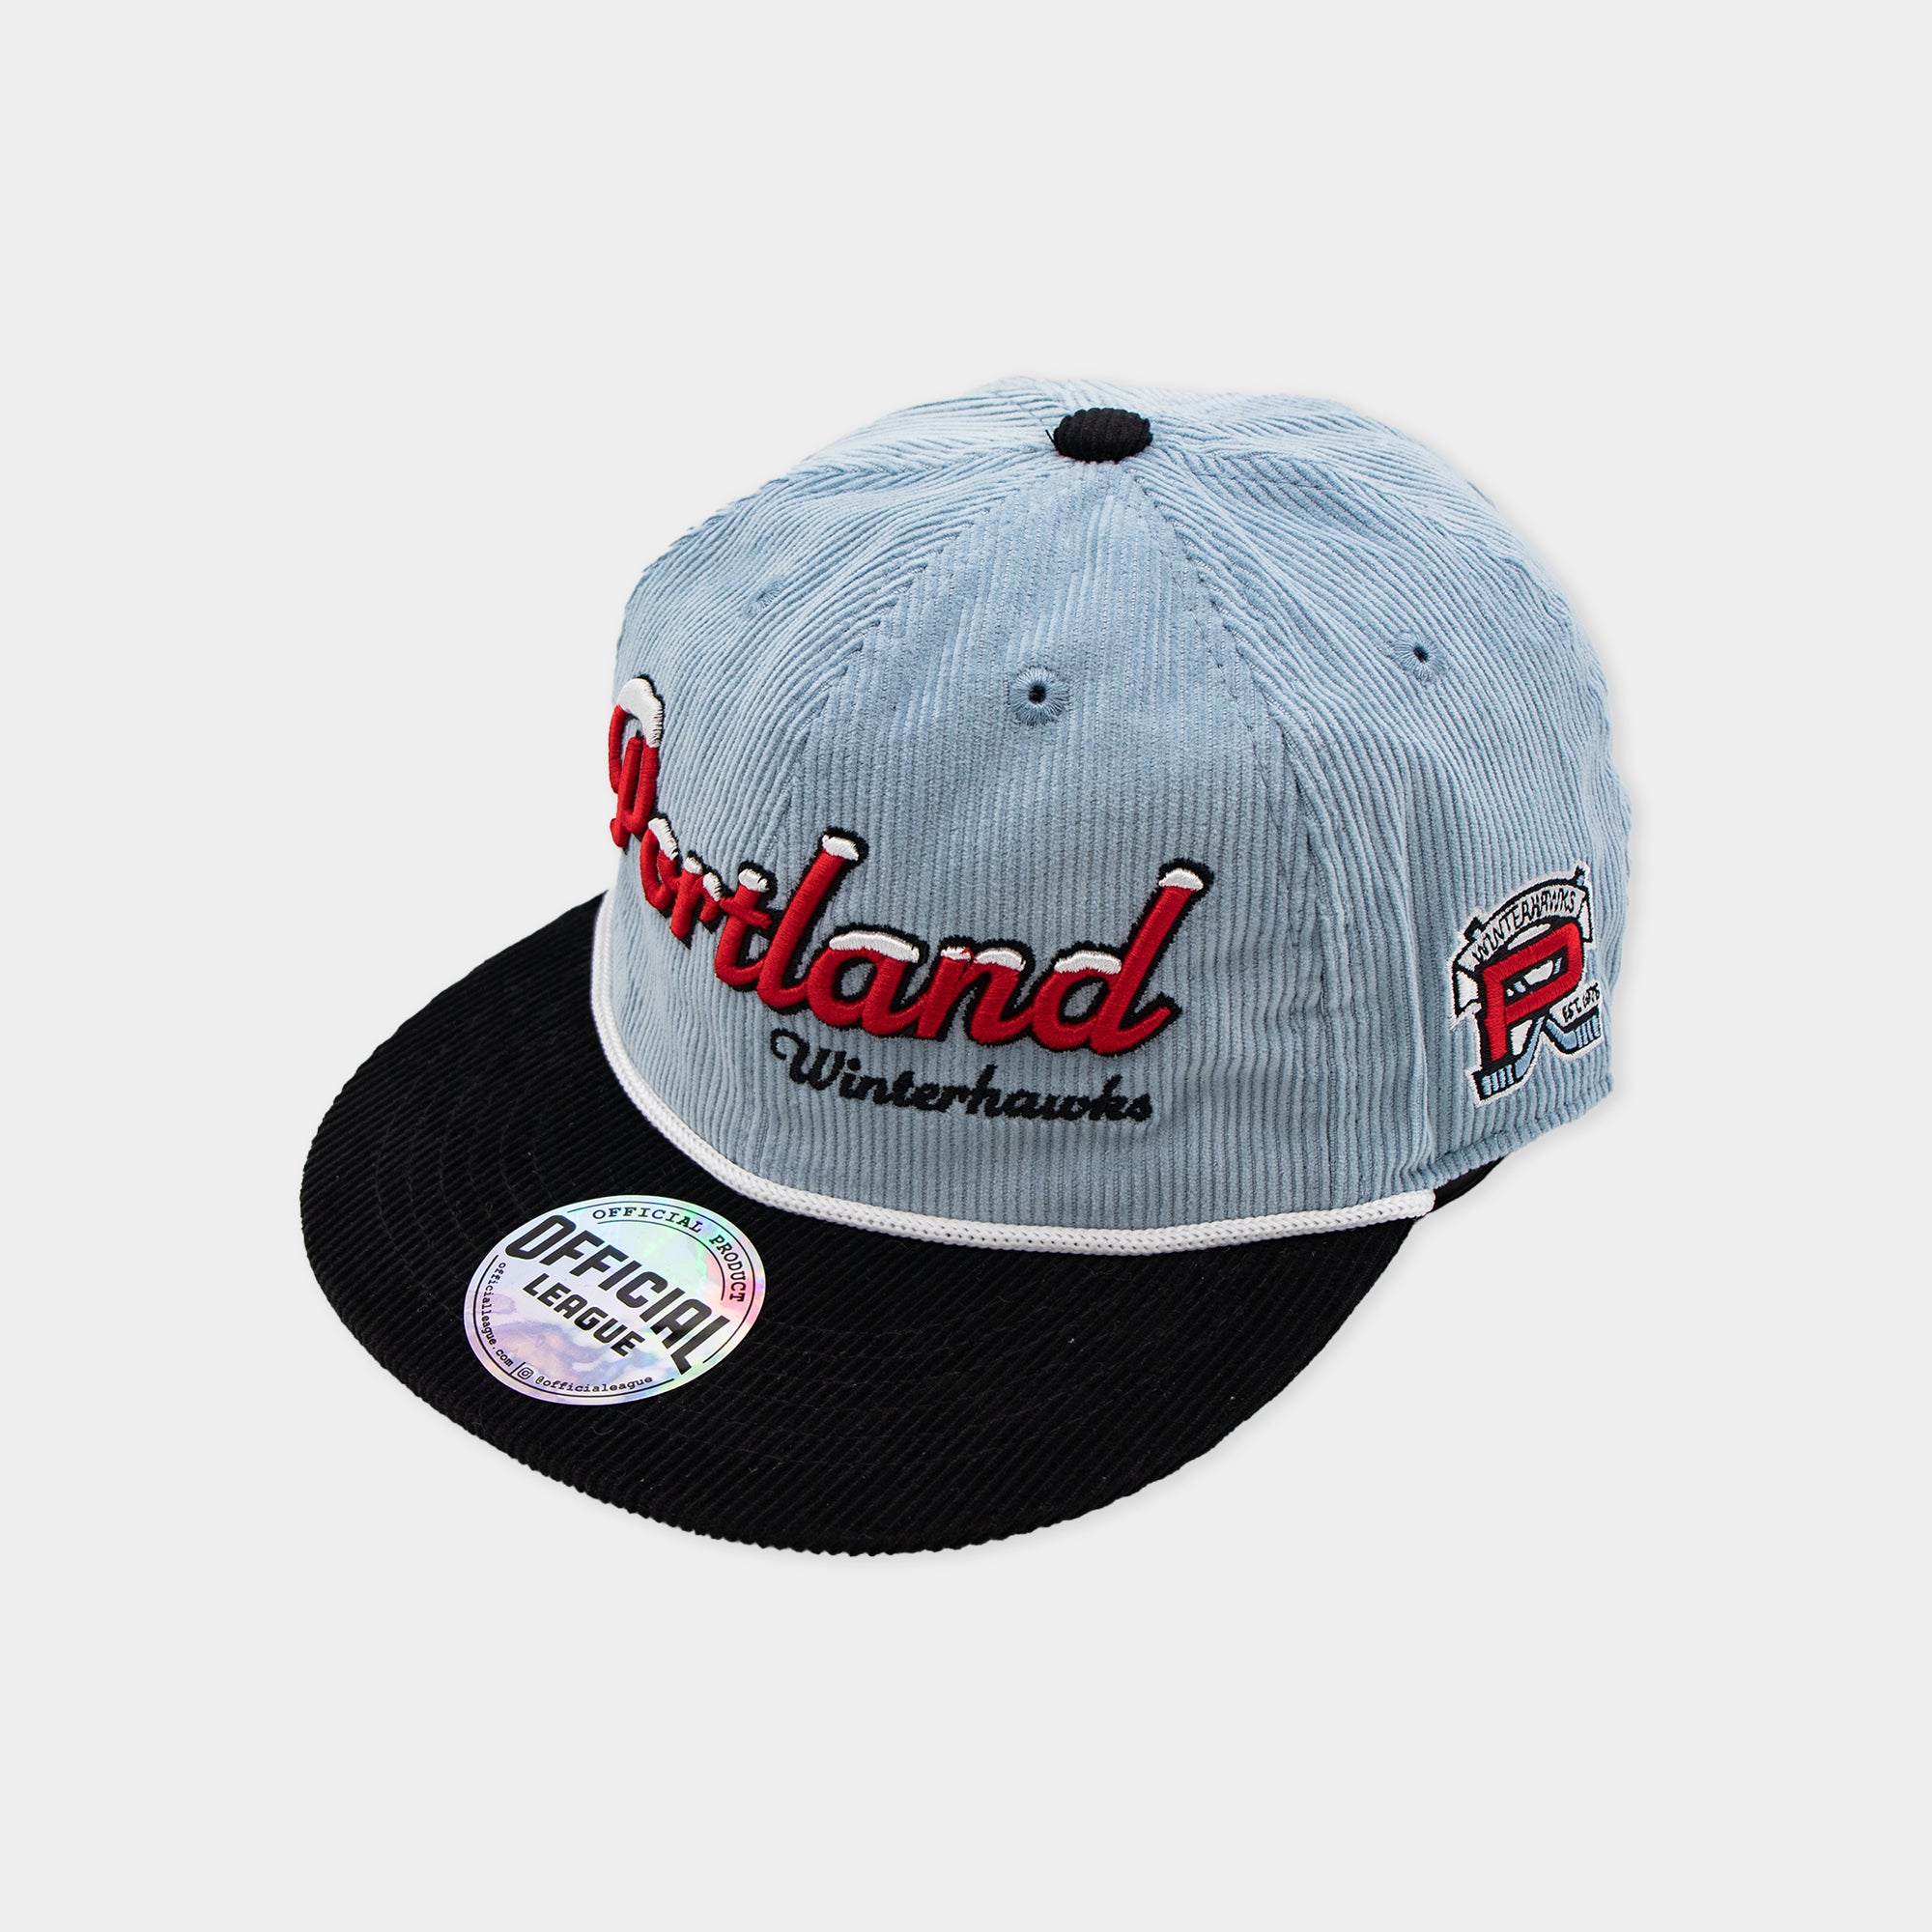 Portland Cord Hat